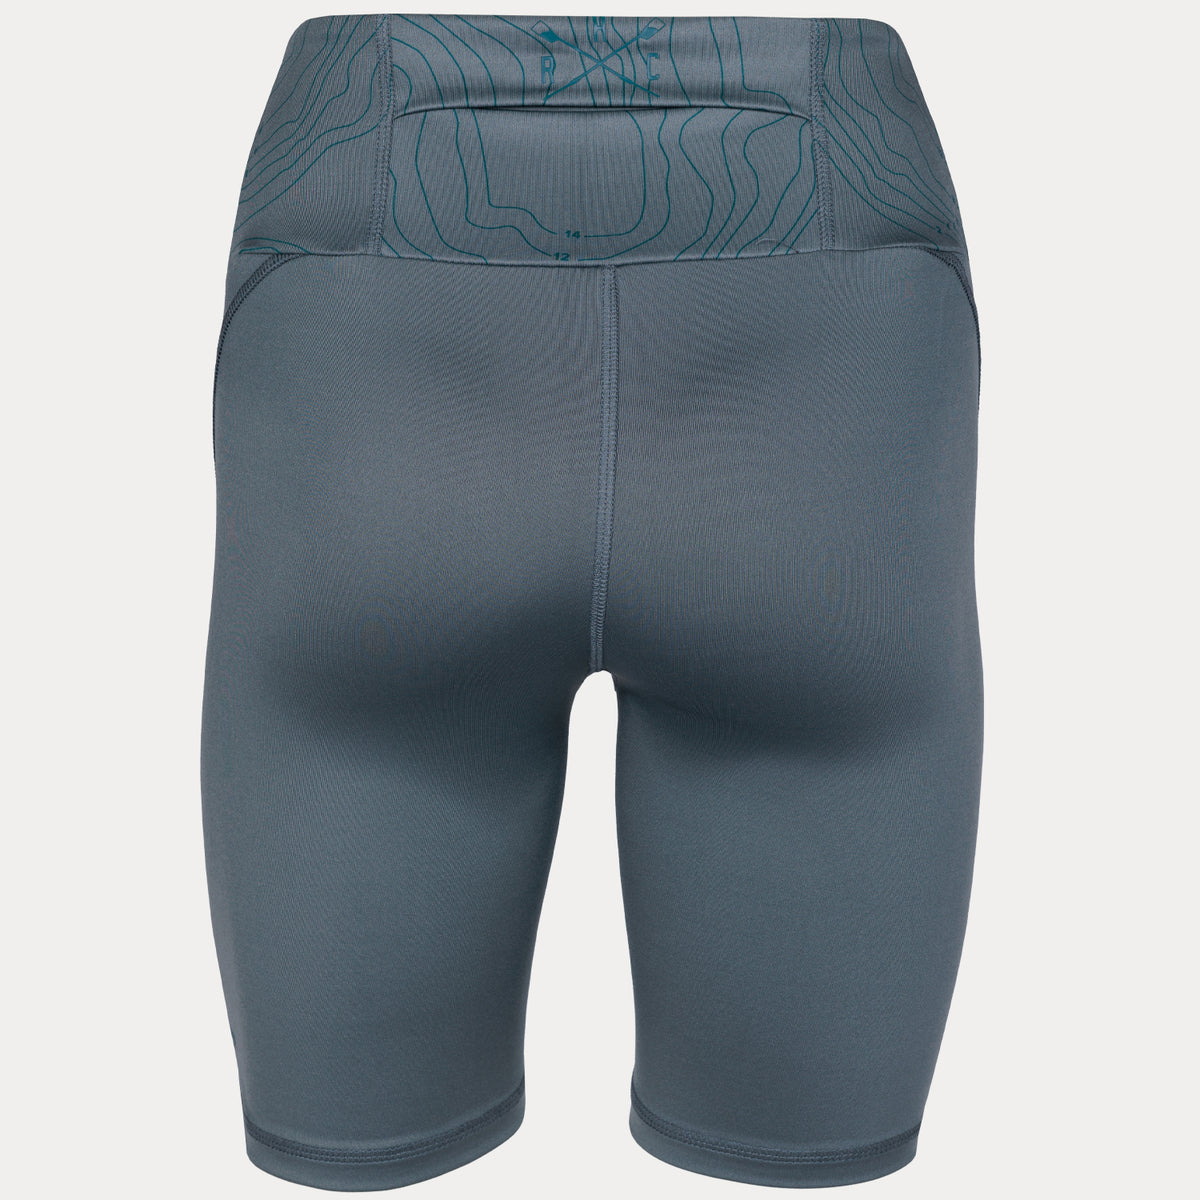 rear view photo of compression shorts in dark blue showcasing hrc crossed oar logo on rear waistband